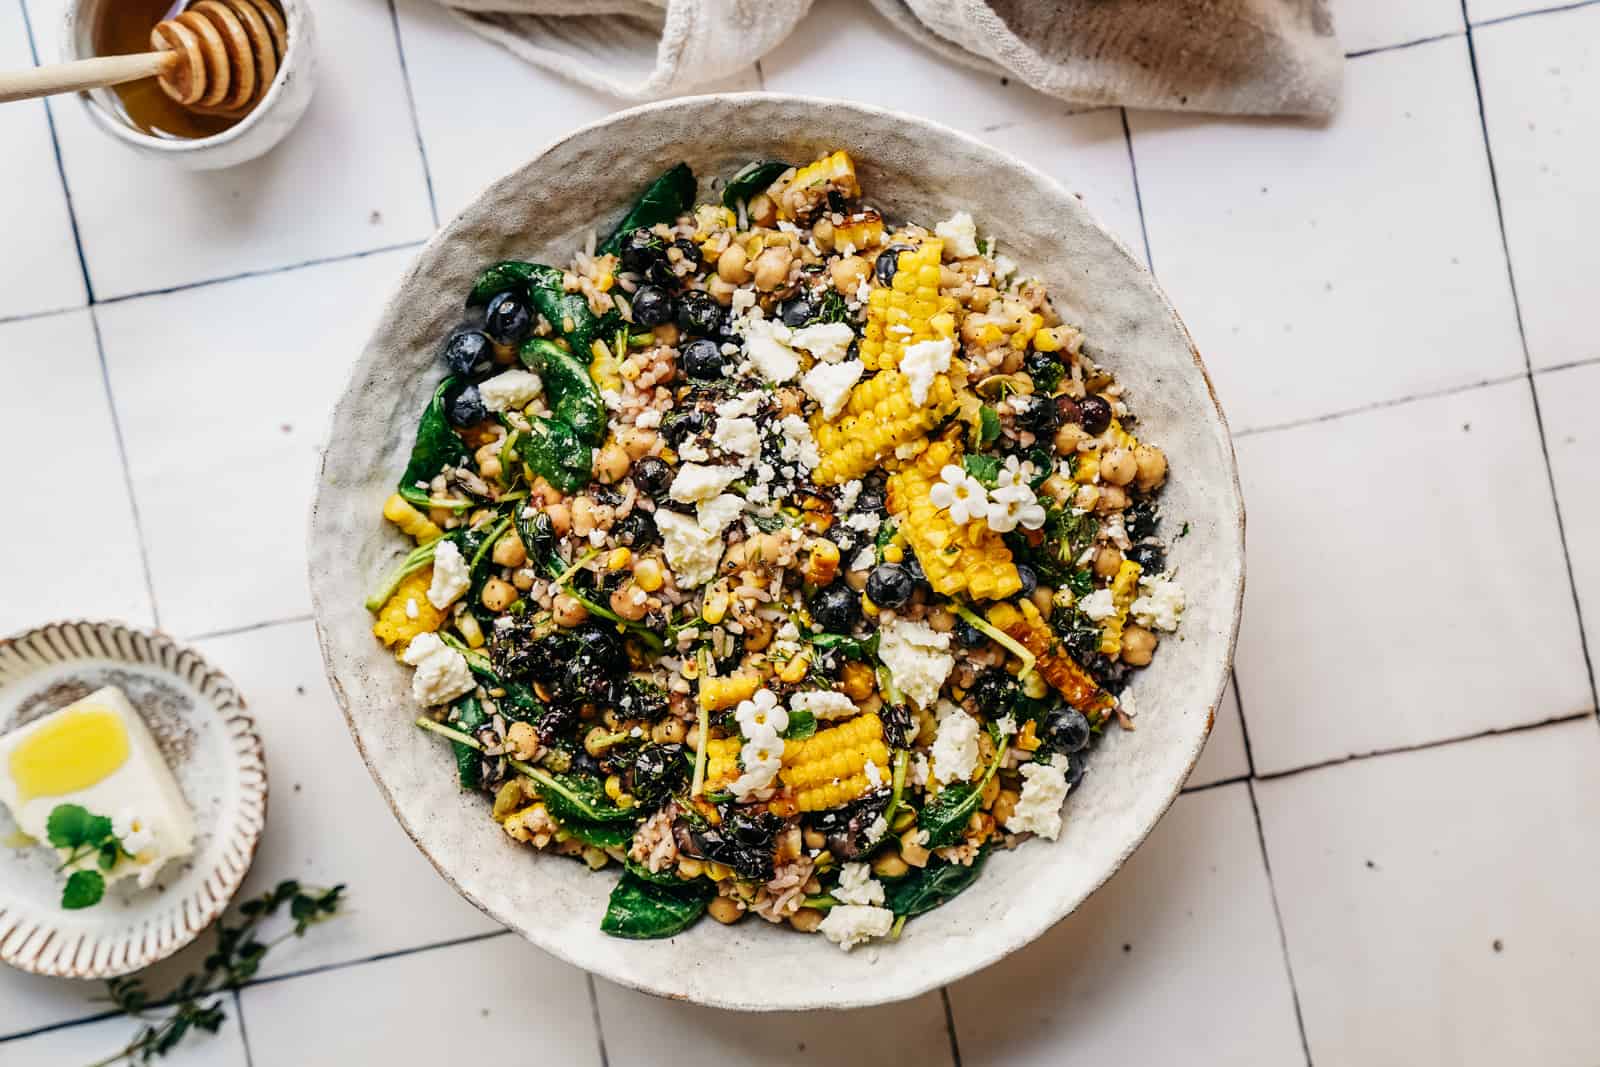 https://www.foodbymaria.com/wp-content/uploads/2020/06/Vegan-Picnic-Salad-7.jpg